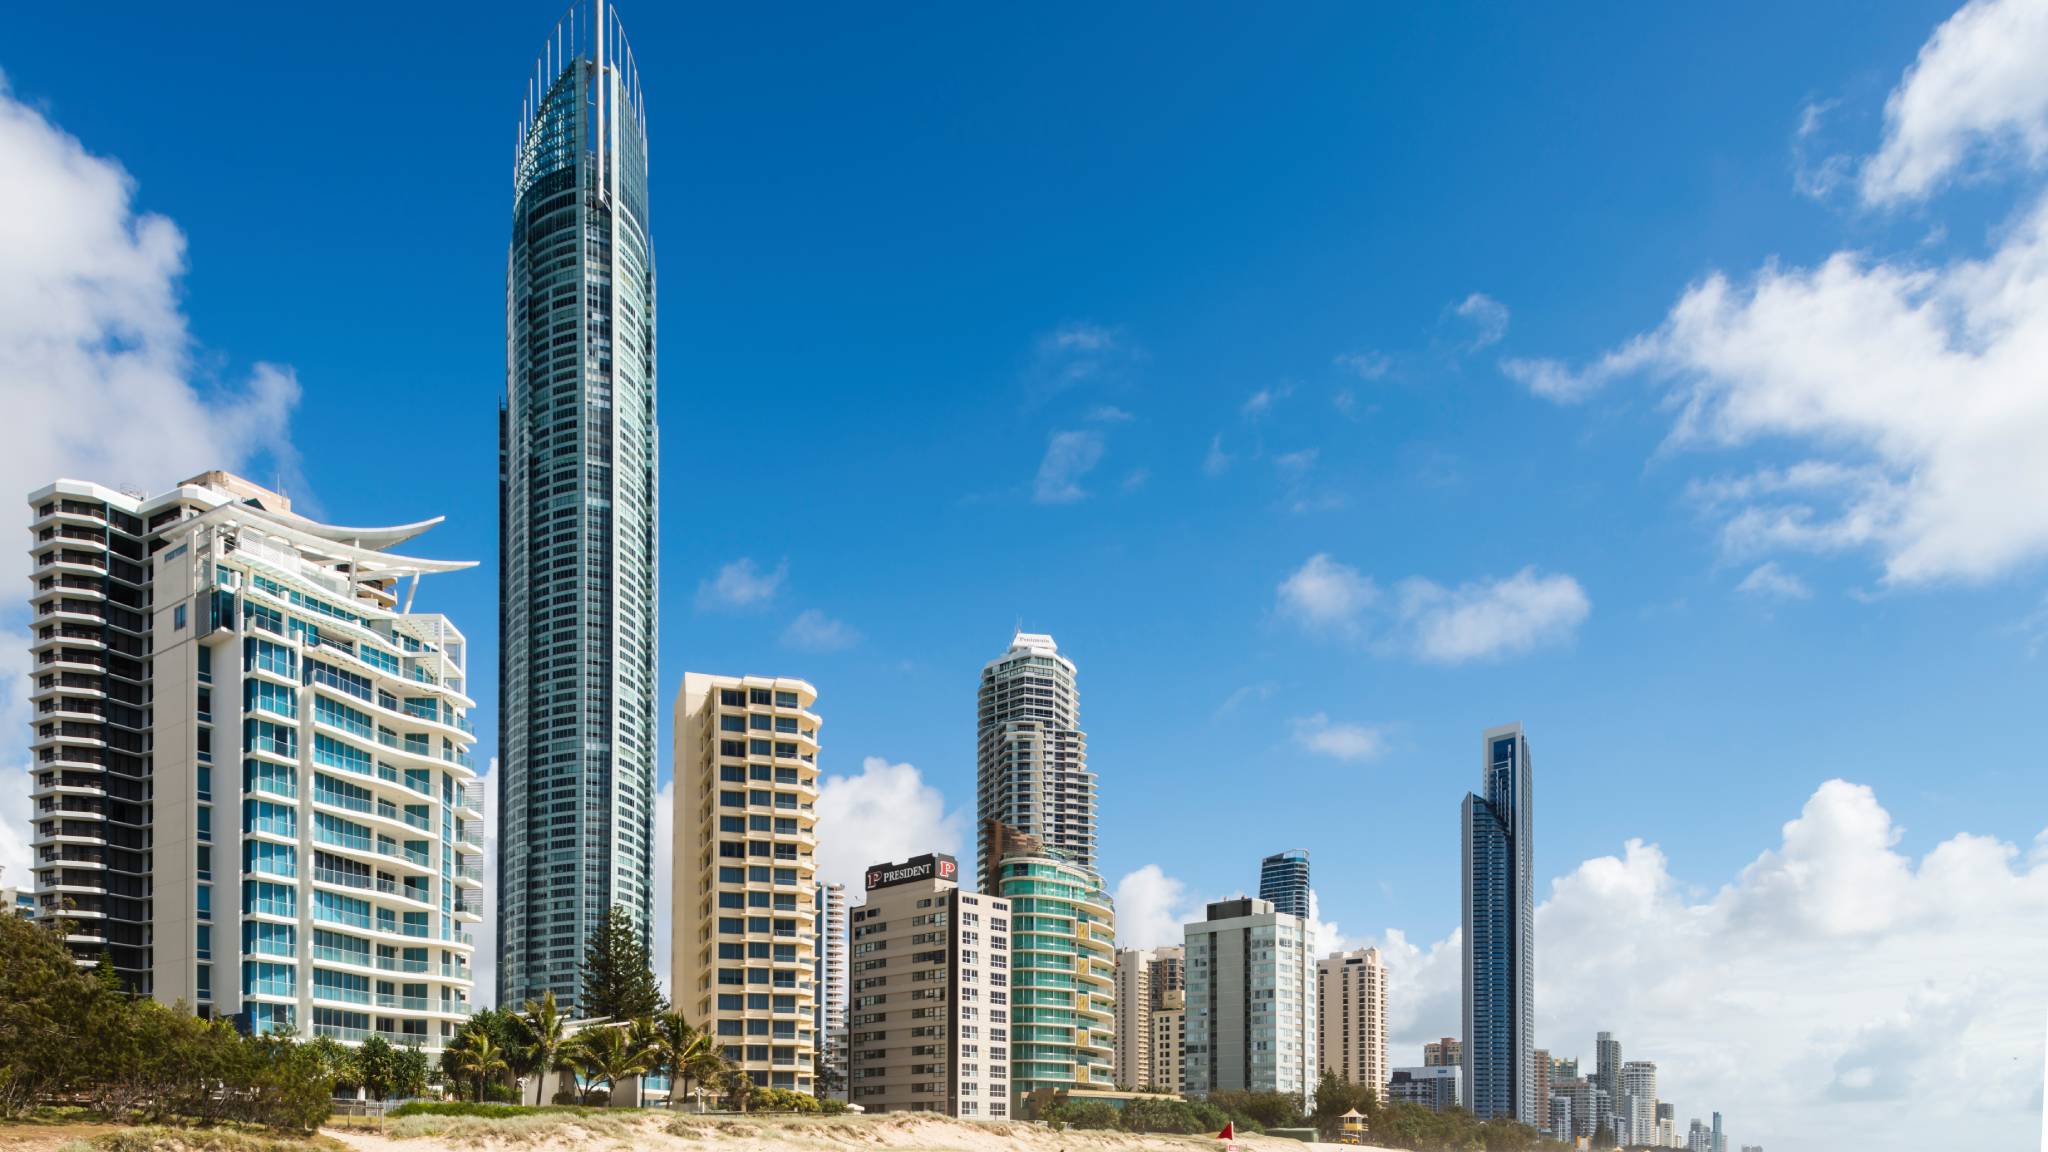 Vertical city Australia - Q1 Building, S